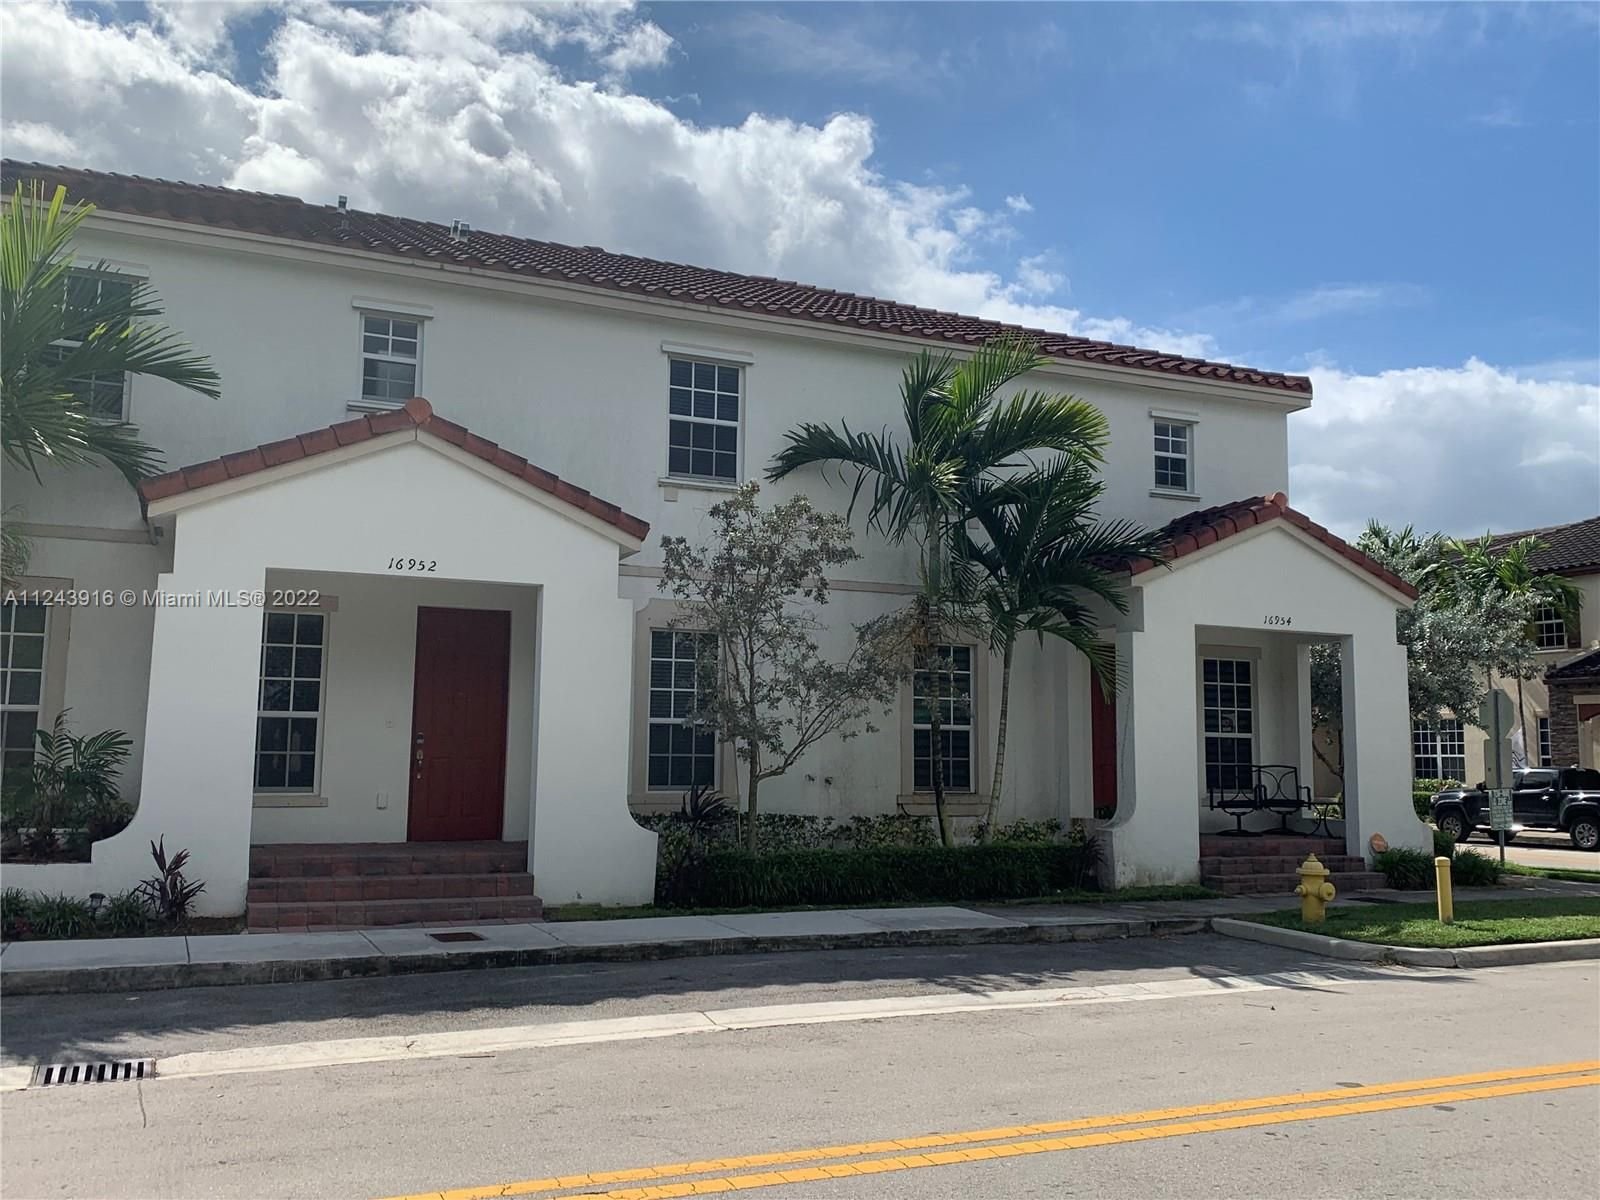 Real estate property located at 16952 90th St, Miami-Dade County, Miami, FL